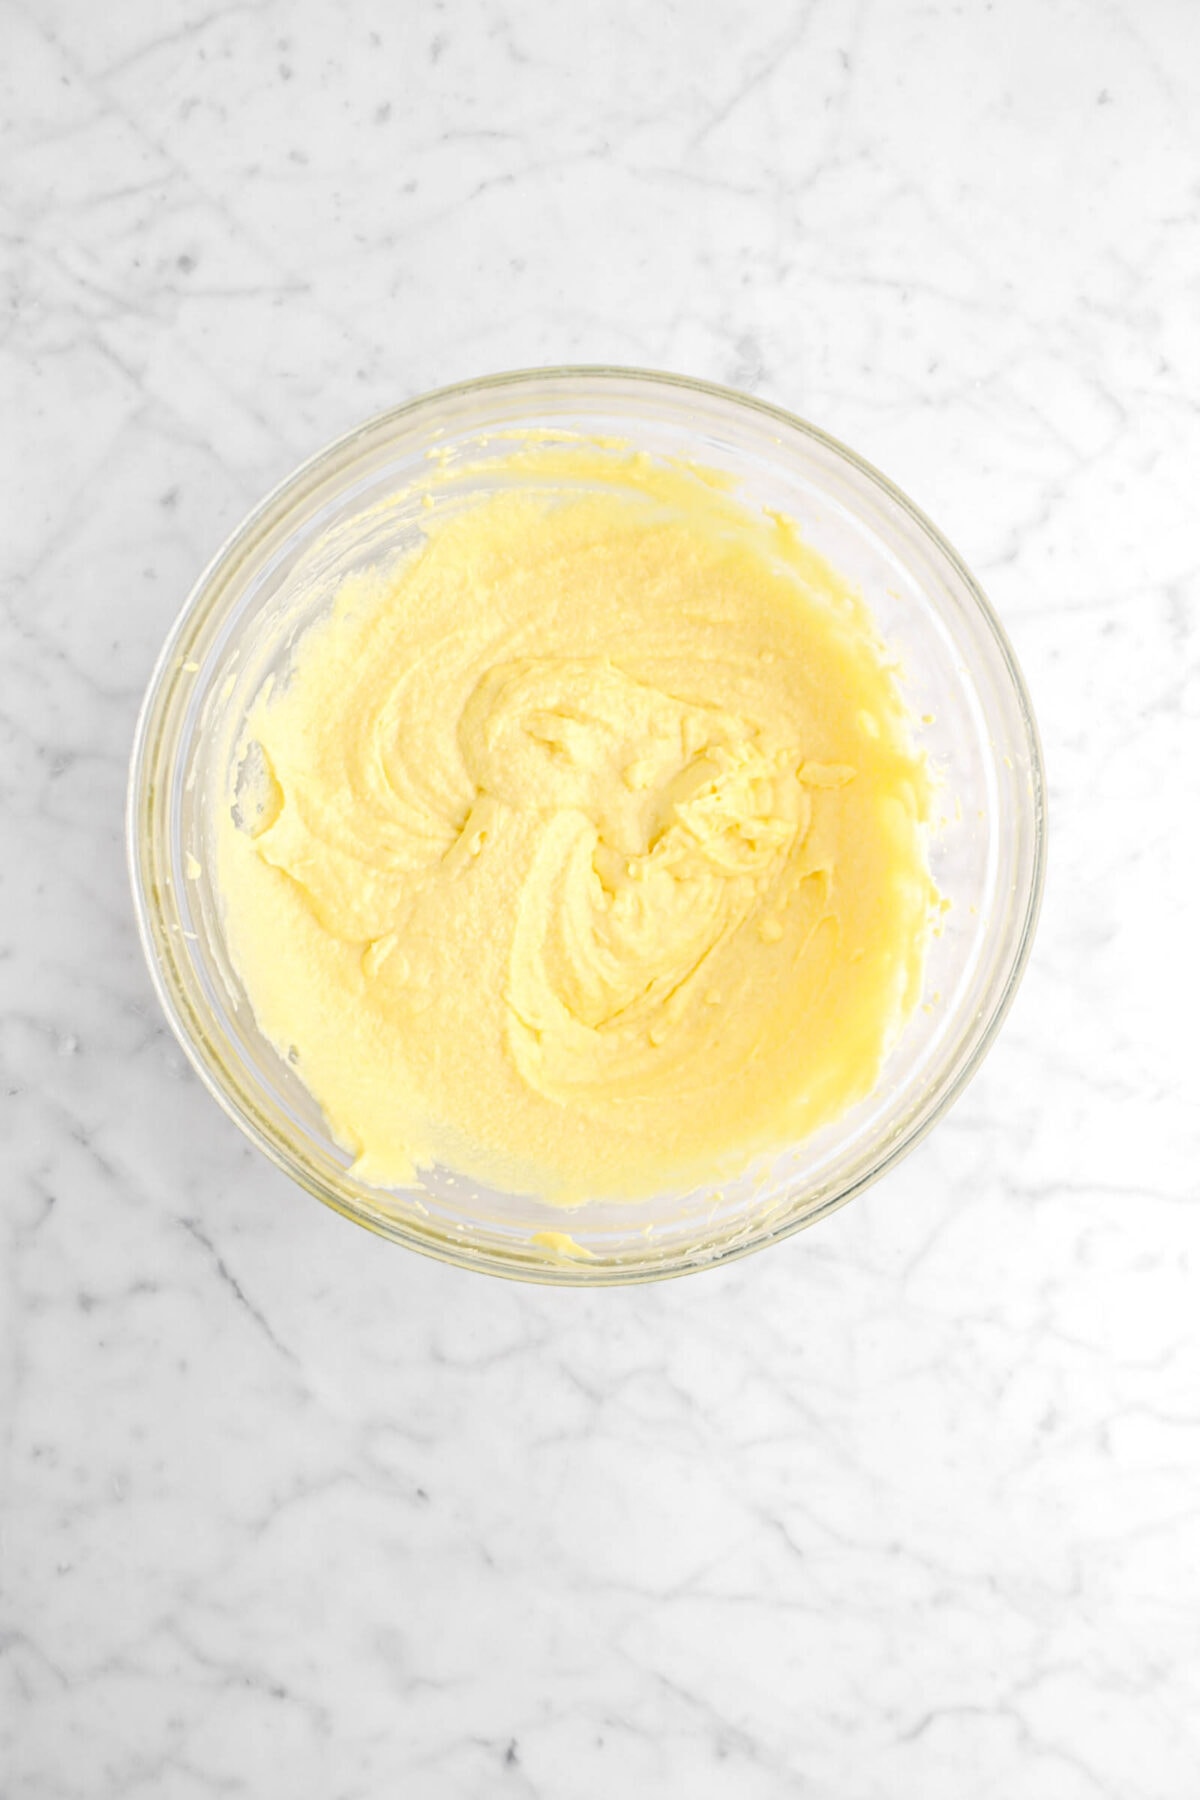 mascarpone and egg yolk mixture in glass bowl